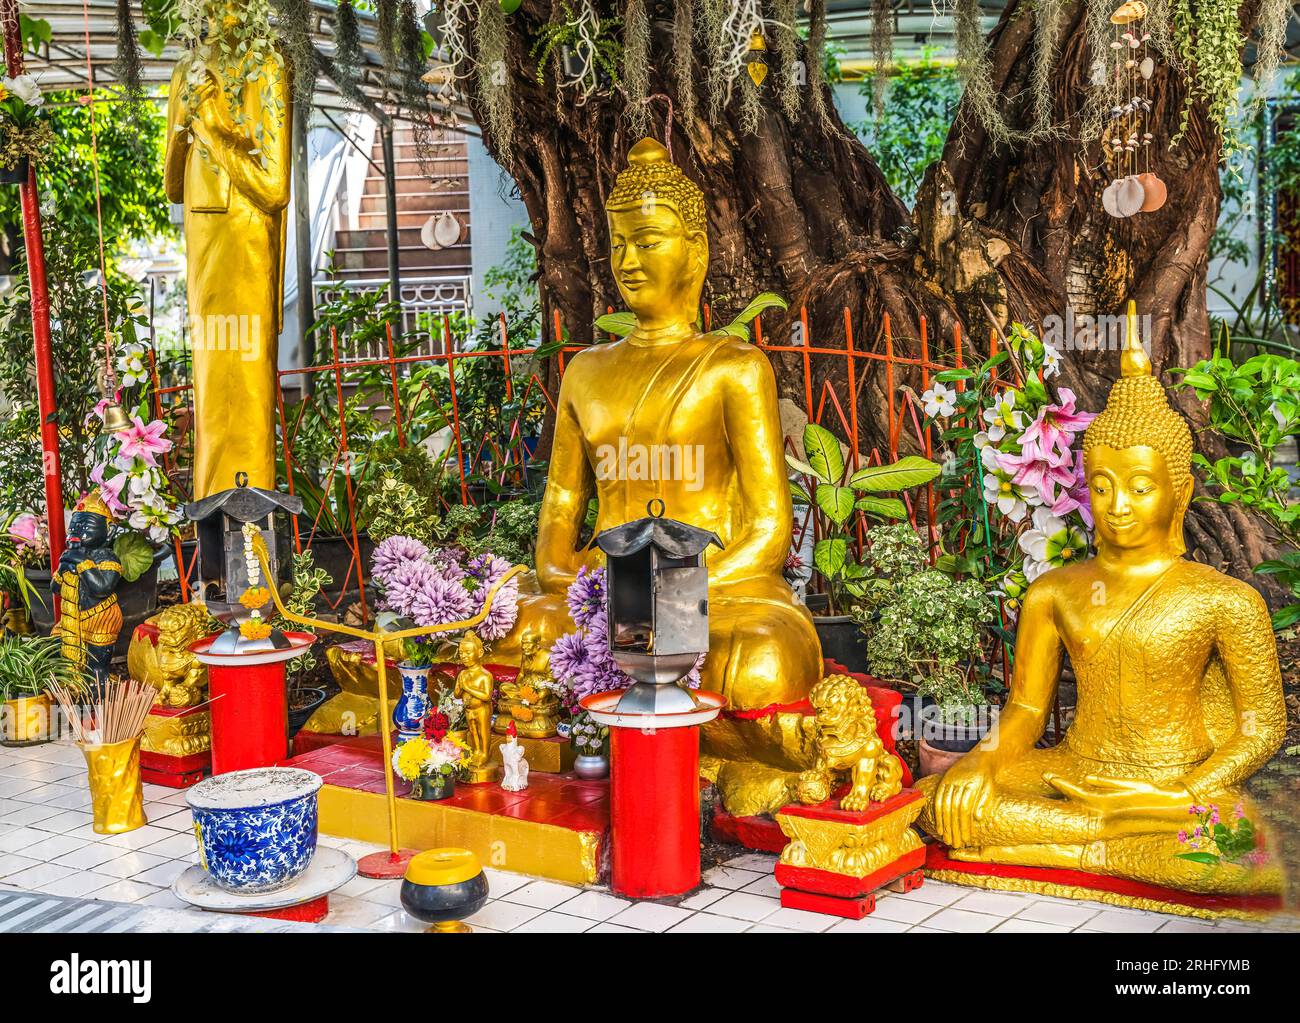 Colorful Golden Buddhas Offerings Garden Offerings Wat That Sanarun Sunthikaram Community Temple Bangkok Thailand. Small old Temple in a neighborhood Stock Photo